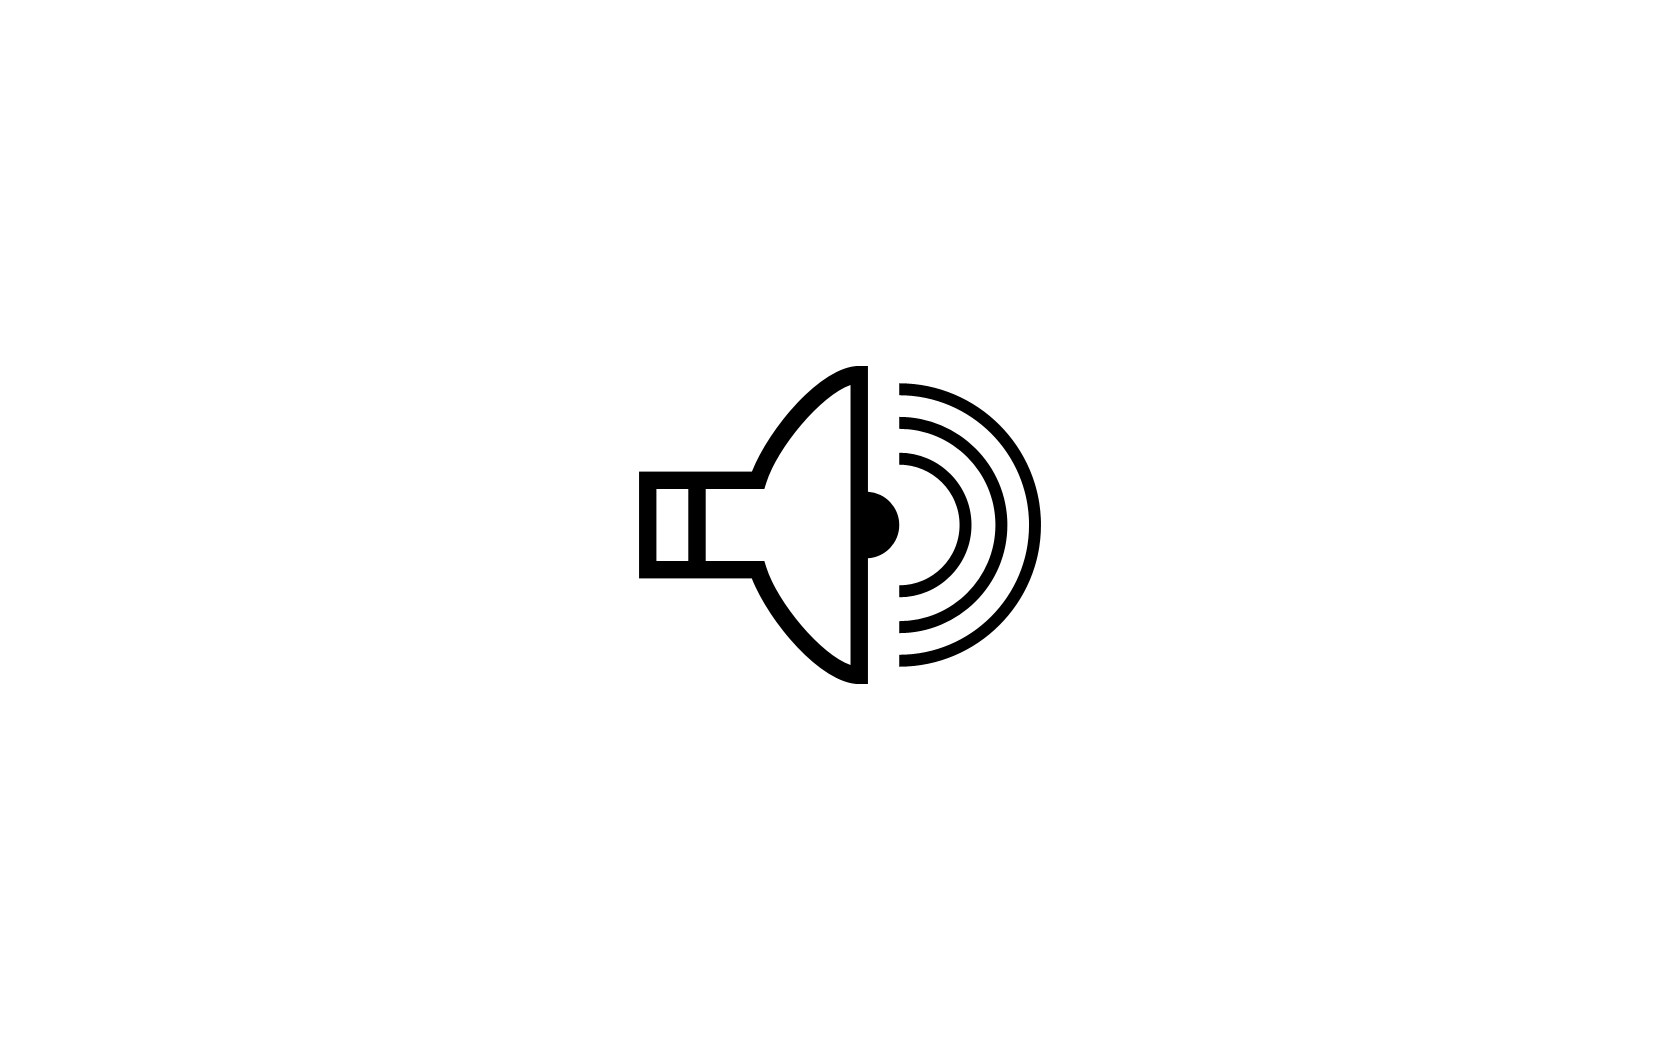 General 1680x1050 minimalism music sound simple background white background speakers symbols icon icons